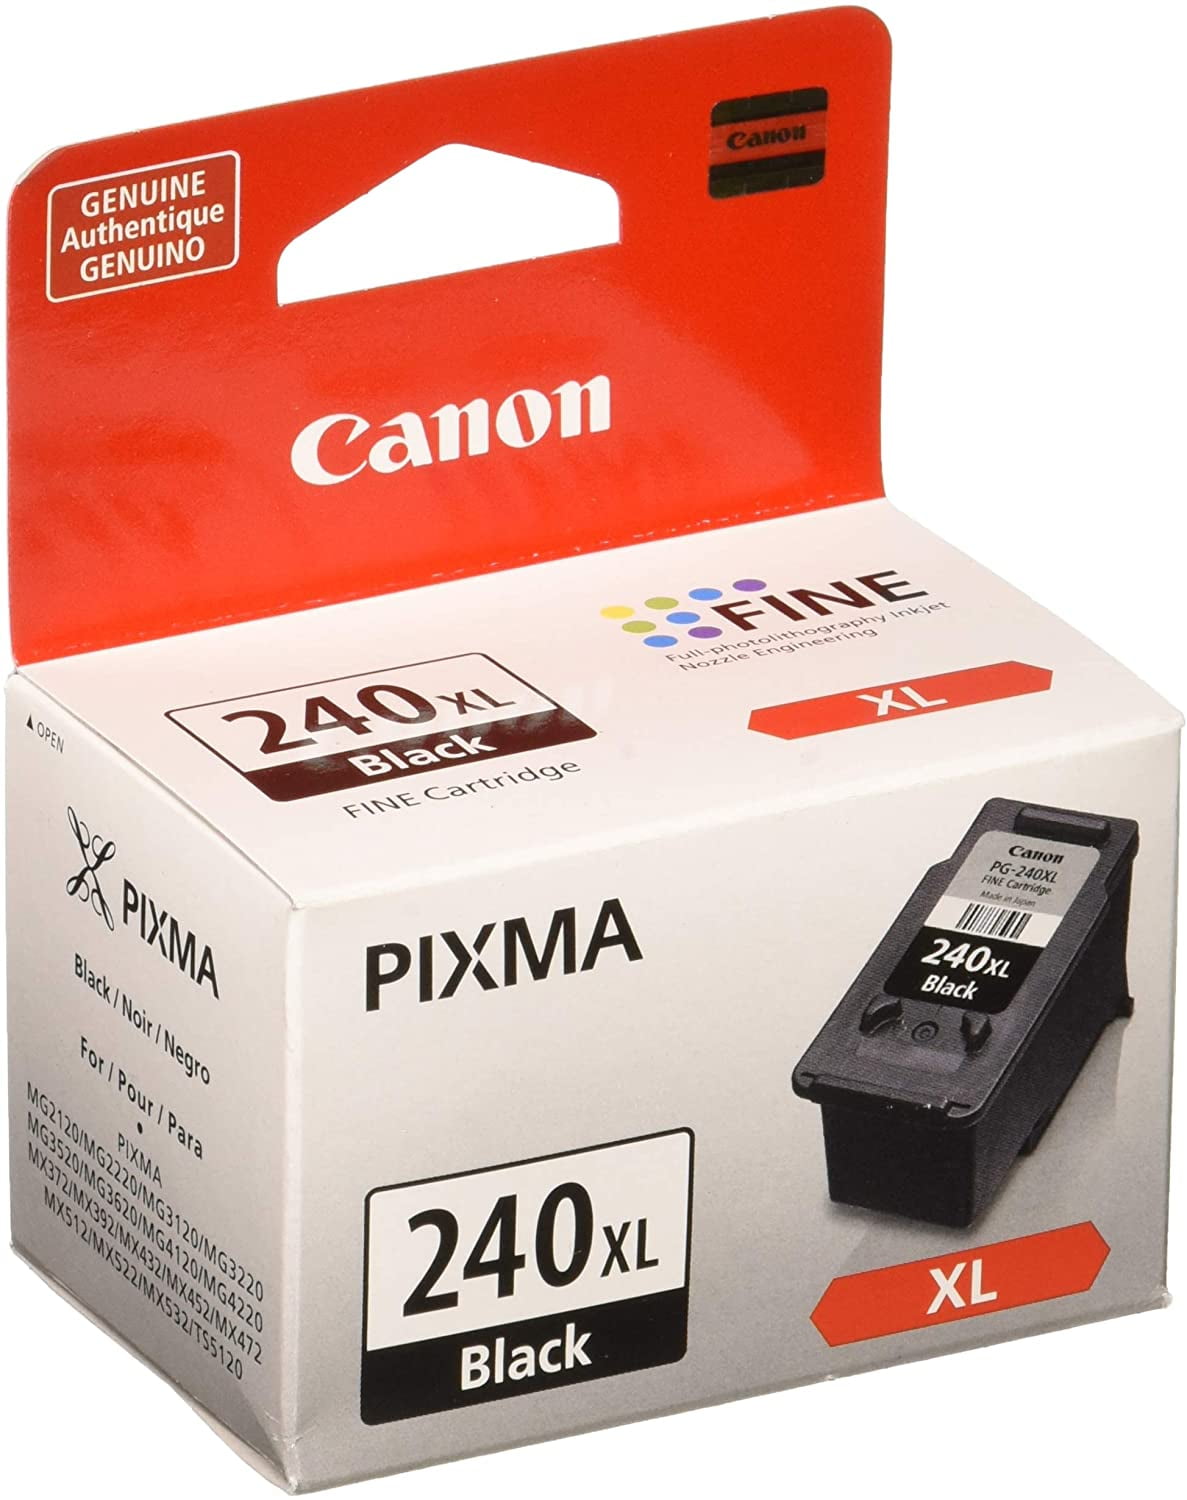 1PK Canon PG-240XL Black Ink Cartridge PIXMA MG3120 MG3520 MX392 MX459 MX532 